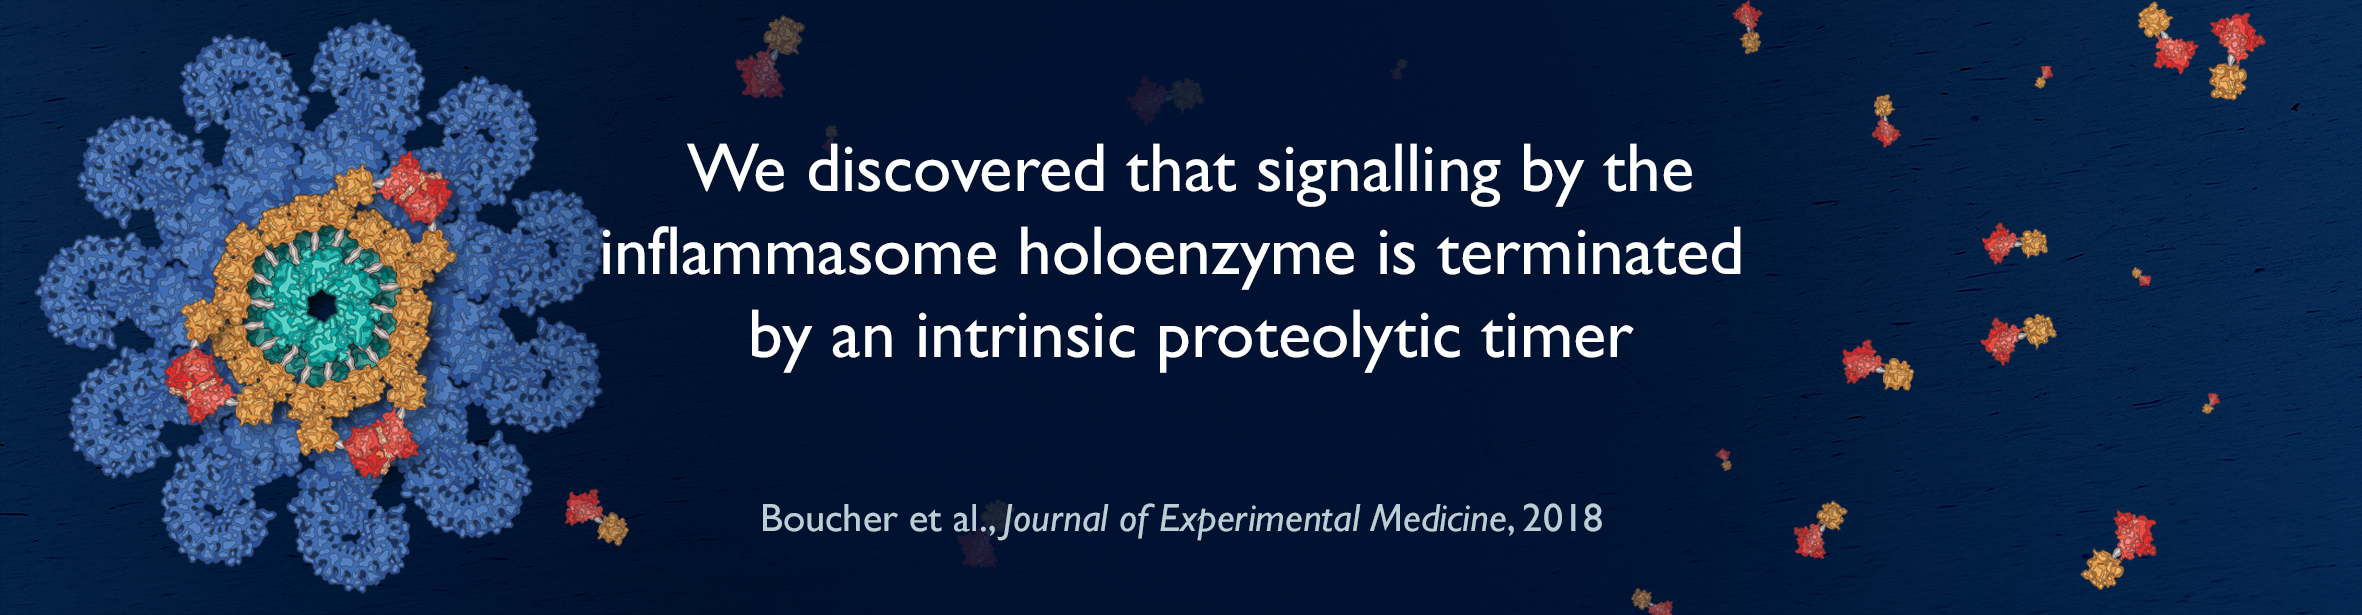 inflammasome holoenzyme proteolytic timer